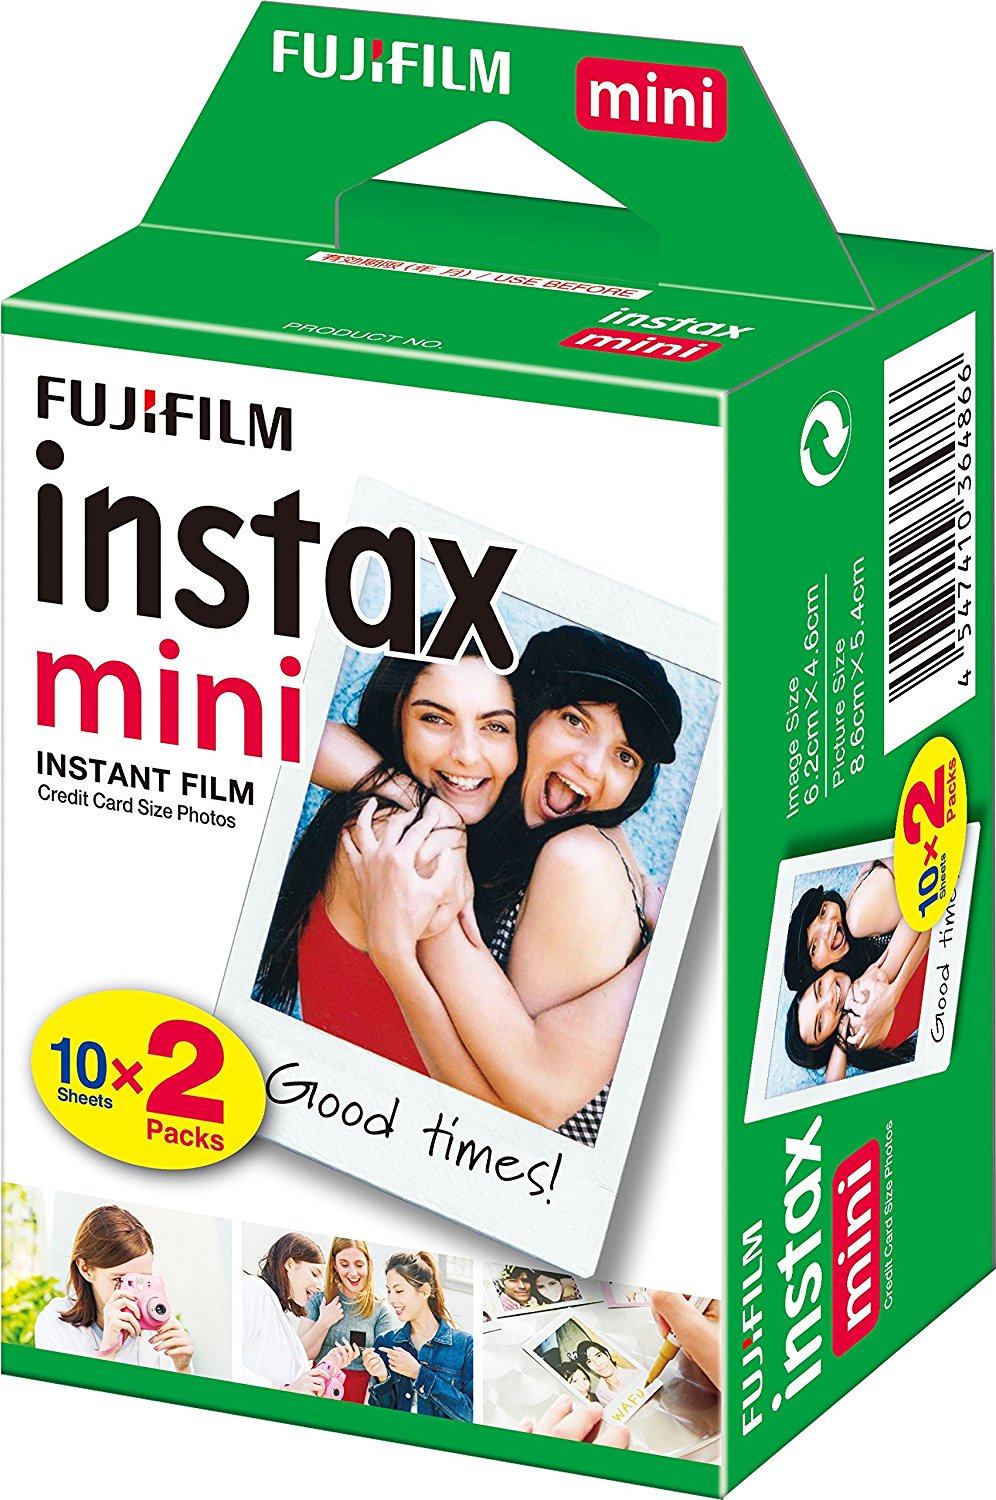 Fujifilm Instax Mini Twin Pack Instant Film Only $12.40!